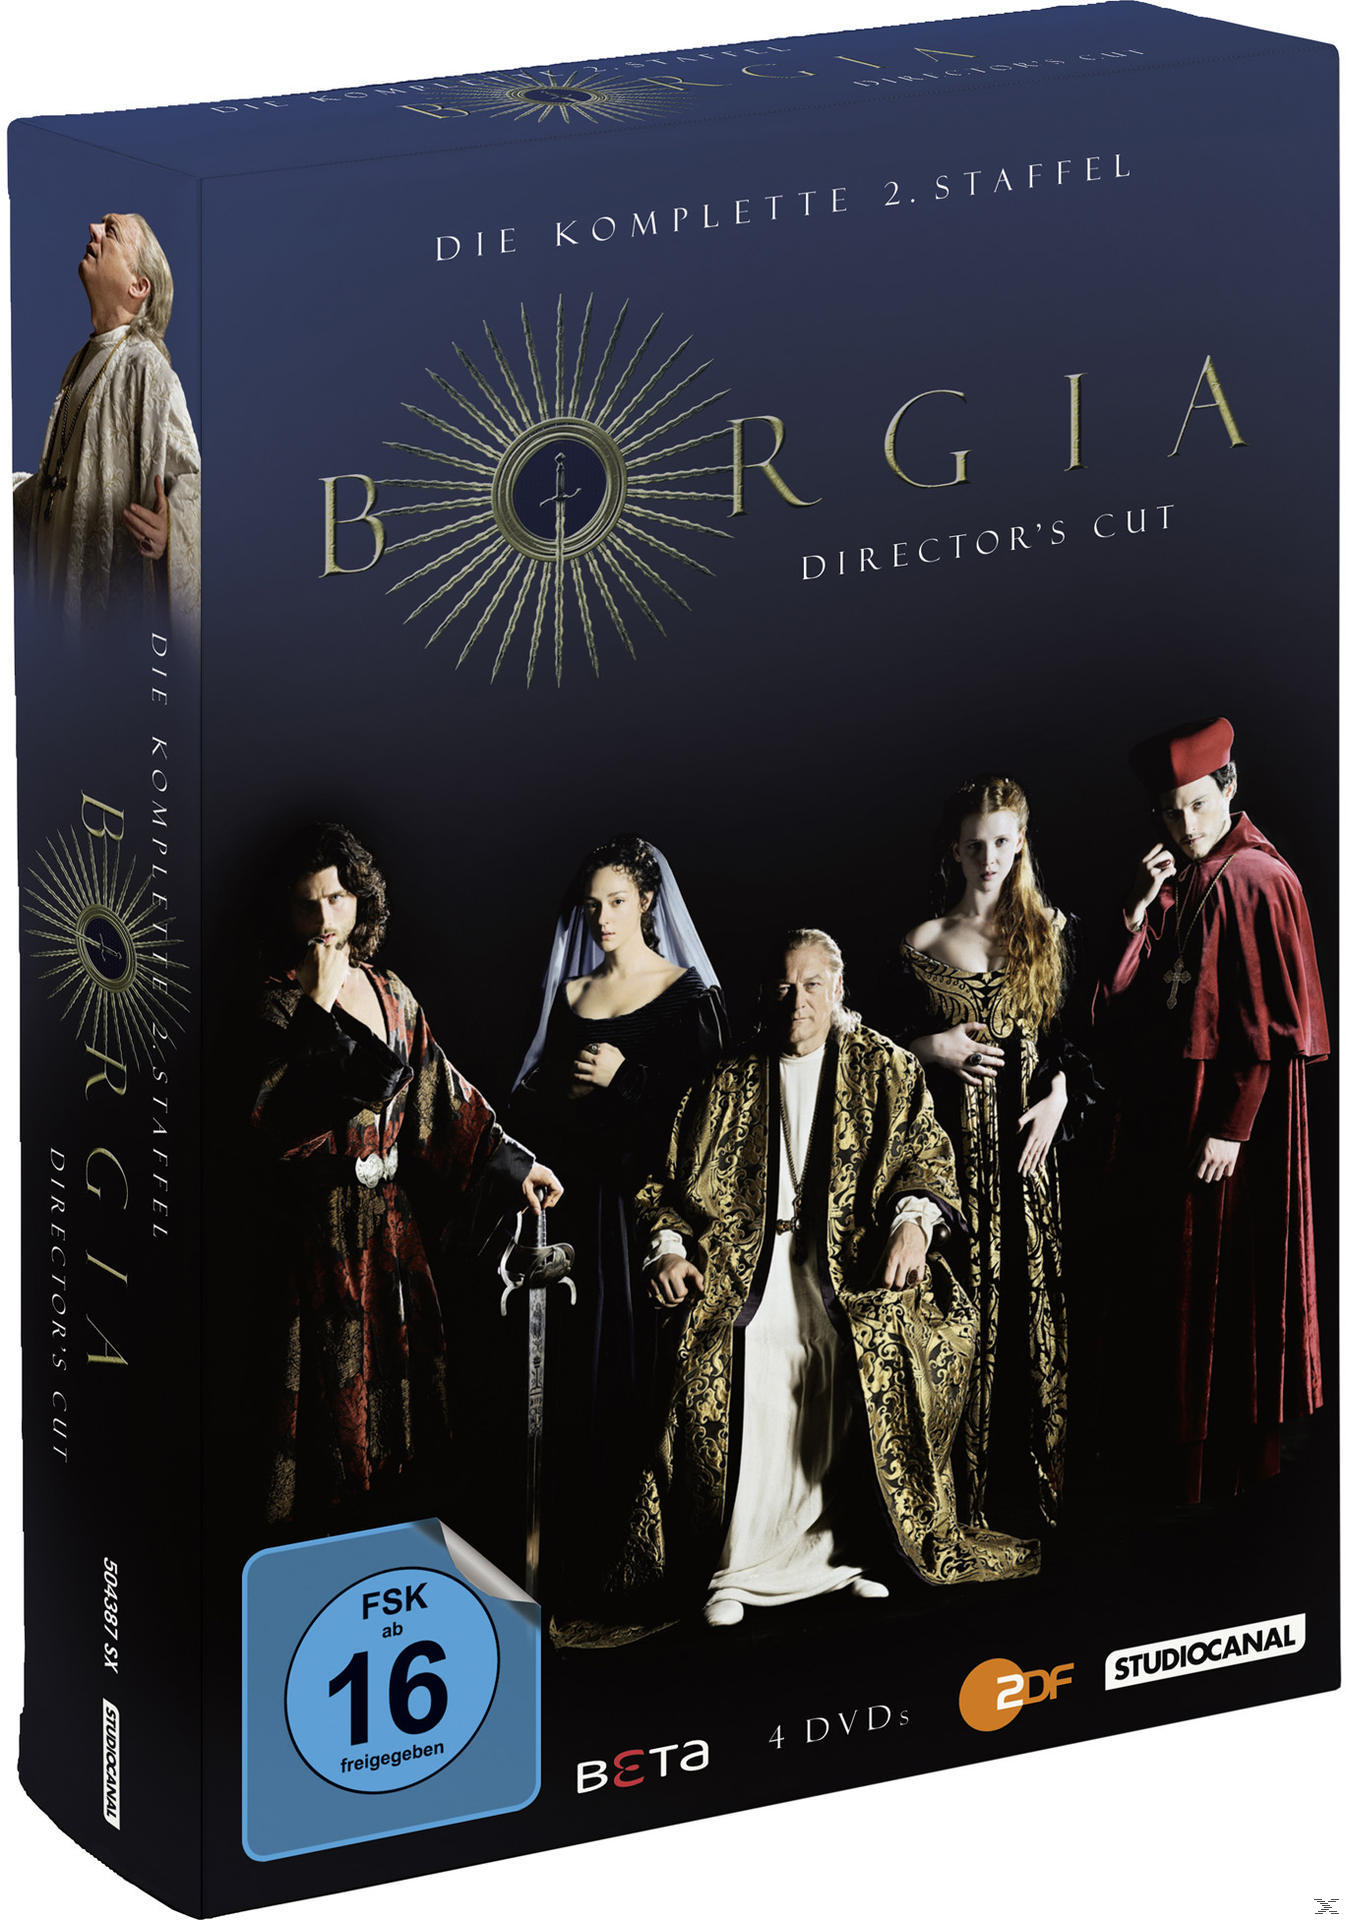 Borgia - Cut) 2 DVD Staffel (Director’s